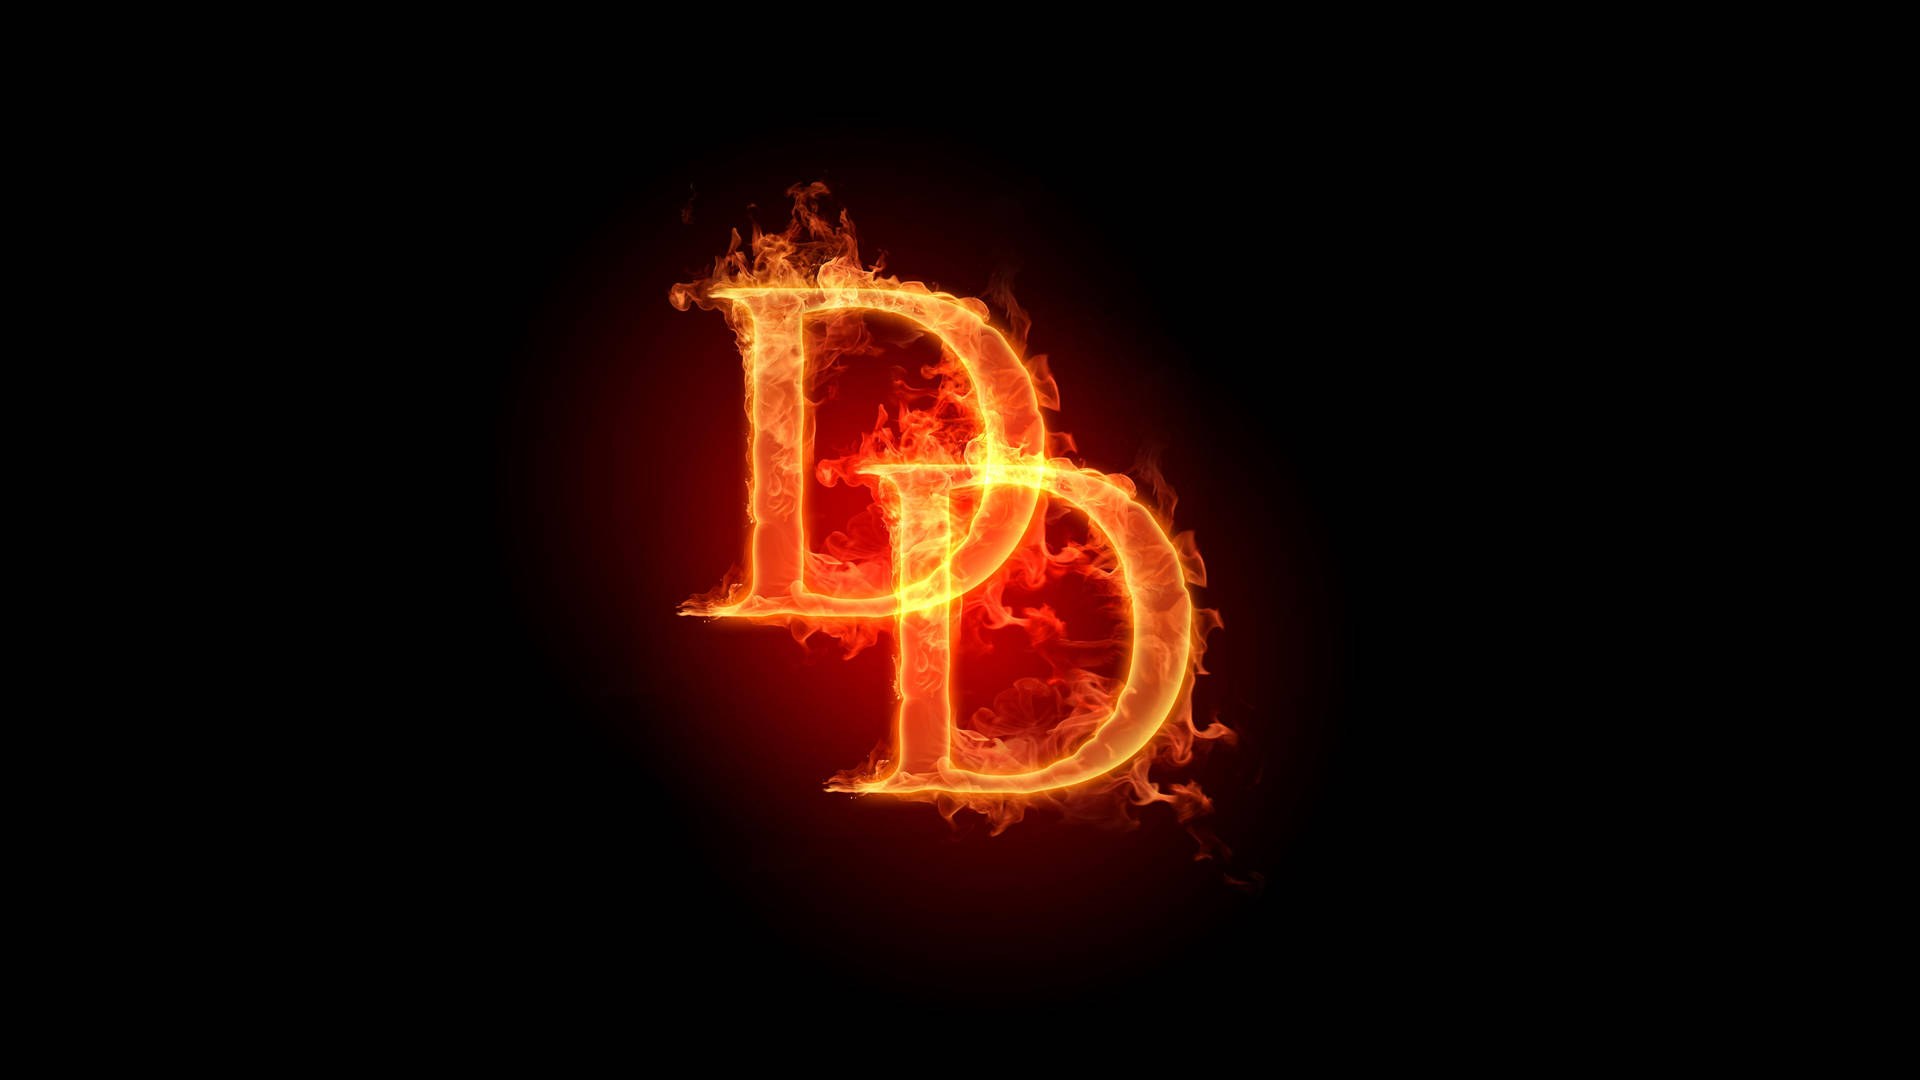 Fiery Dual D Scripts On A Black Background